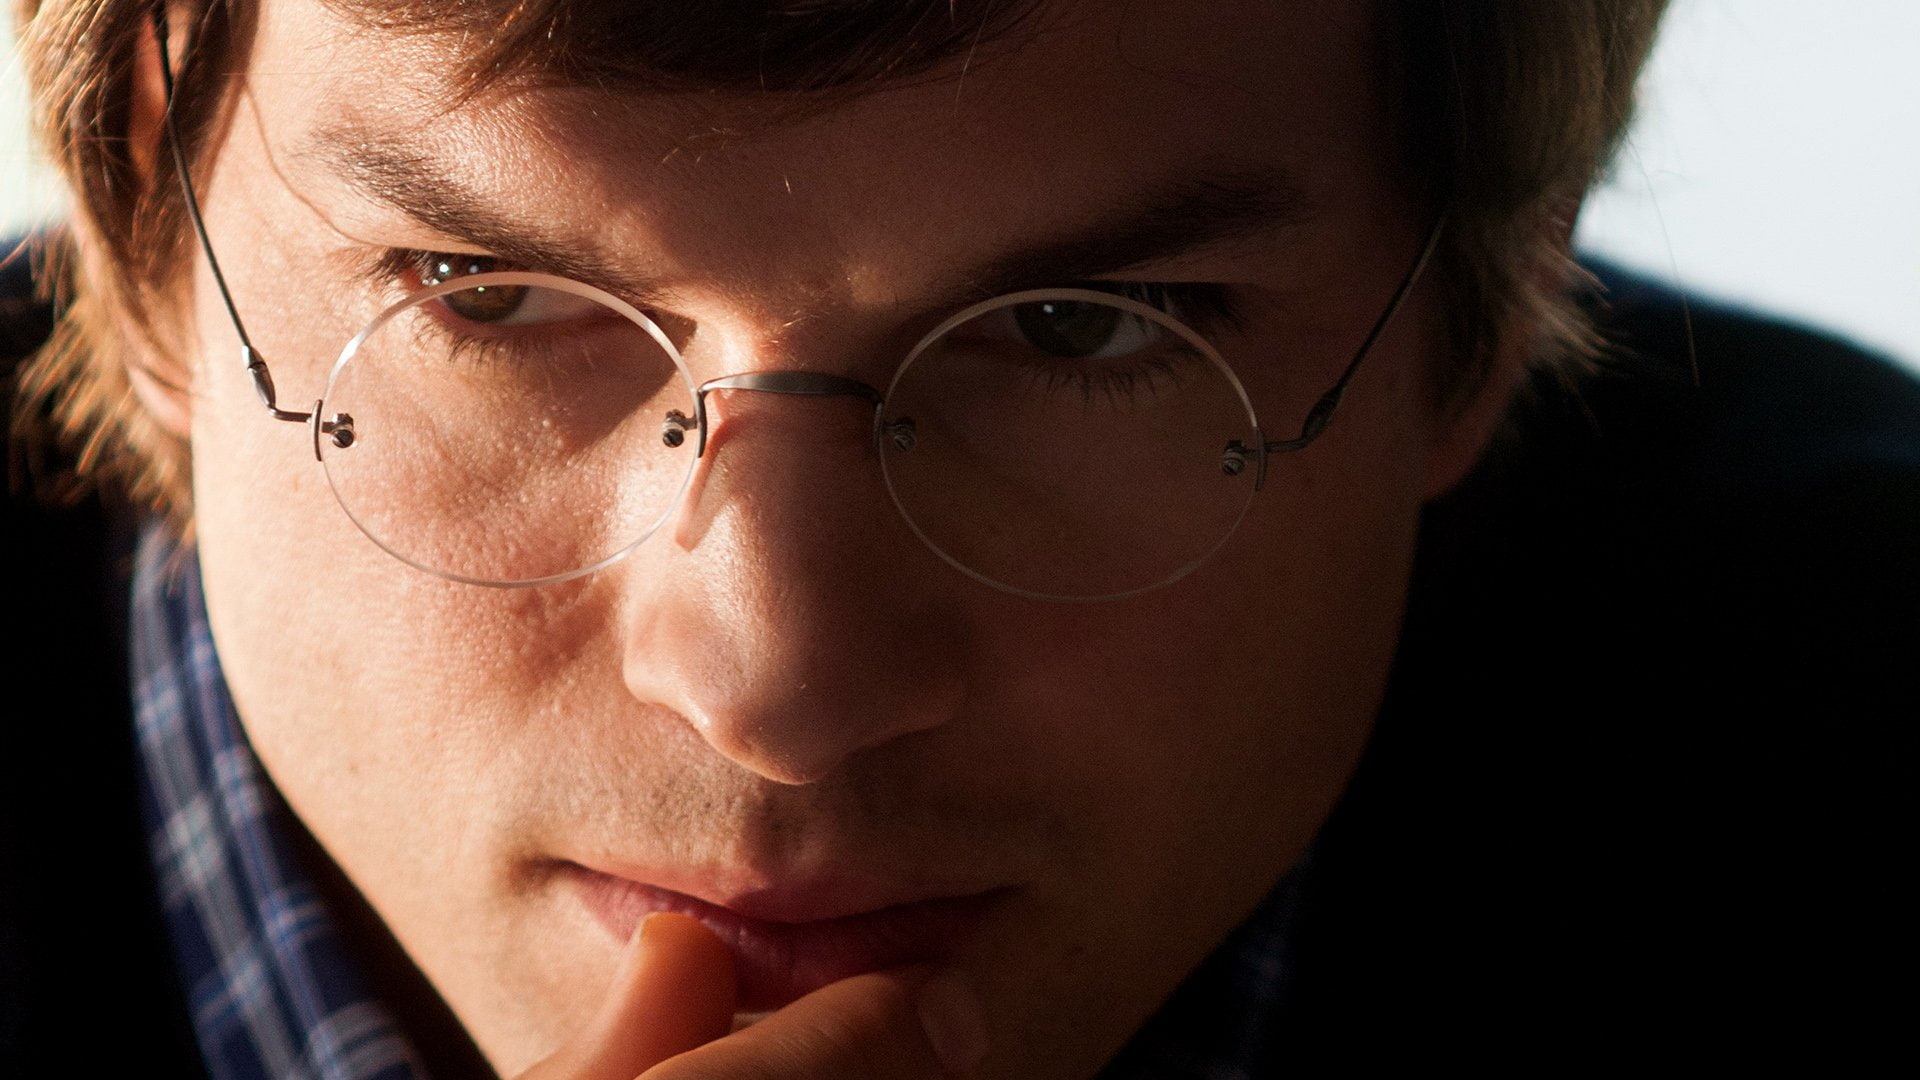 Movie, Jobs, Ashton Kutcher, one person, portrait, adult, serious